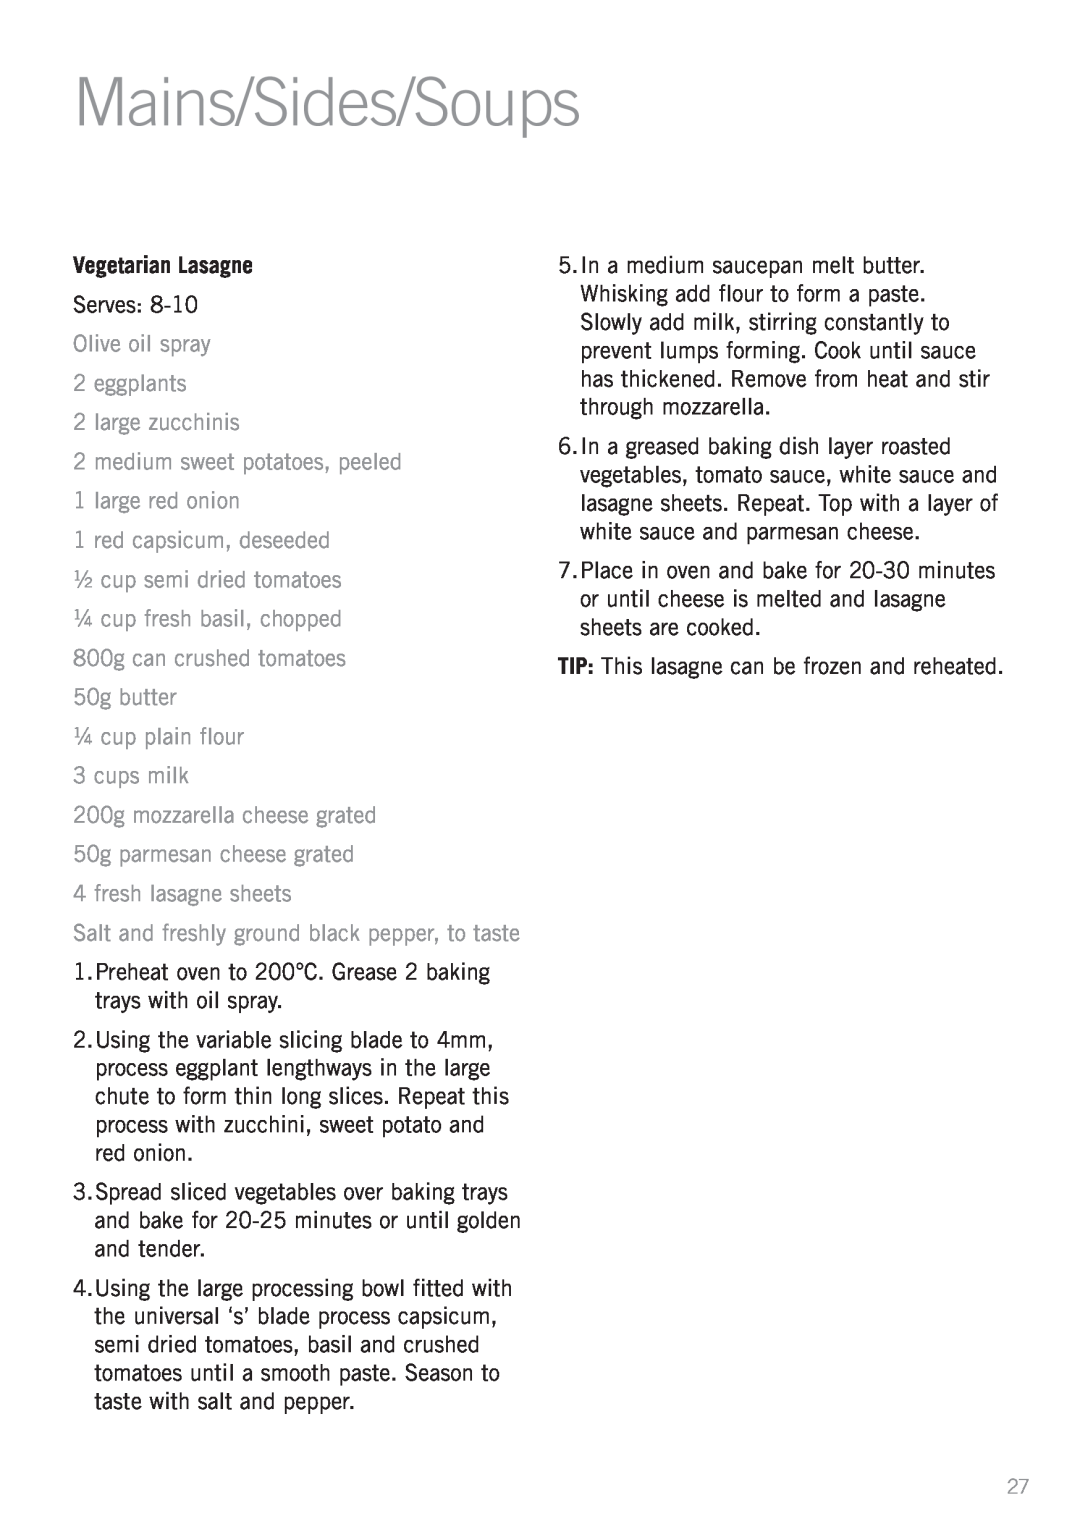 Sunbeam LC9000 manual Mains/Sides/Soups, large zucchinis 2 medium sweet potatoes, peeled, ¼ cup plain flour 3 cups milk 